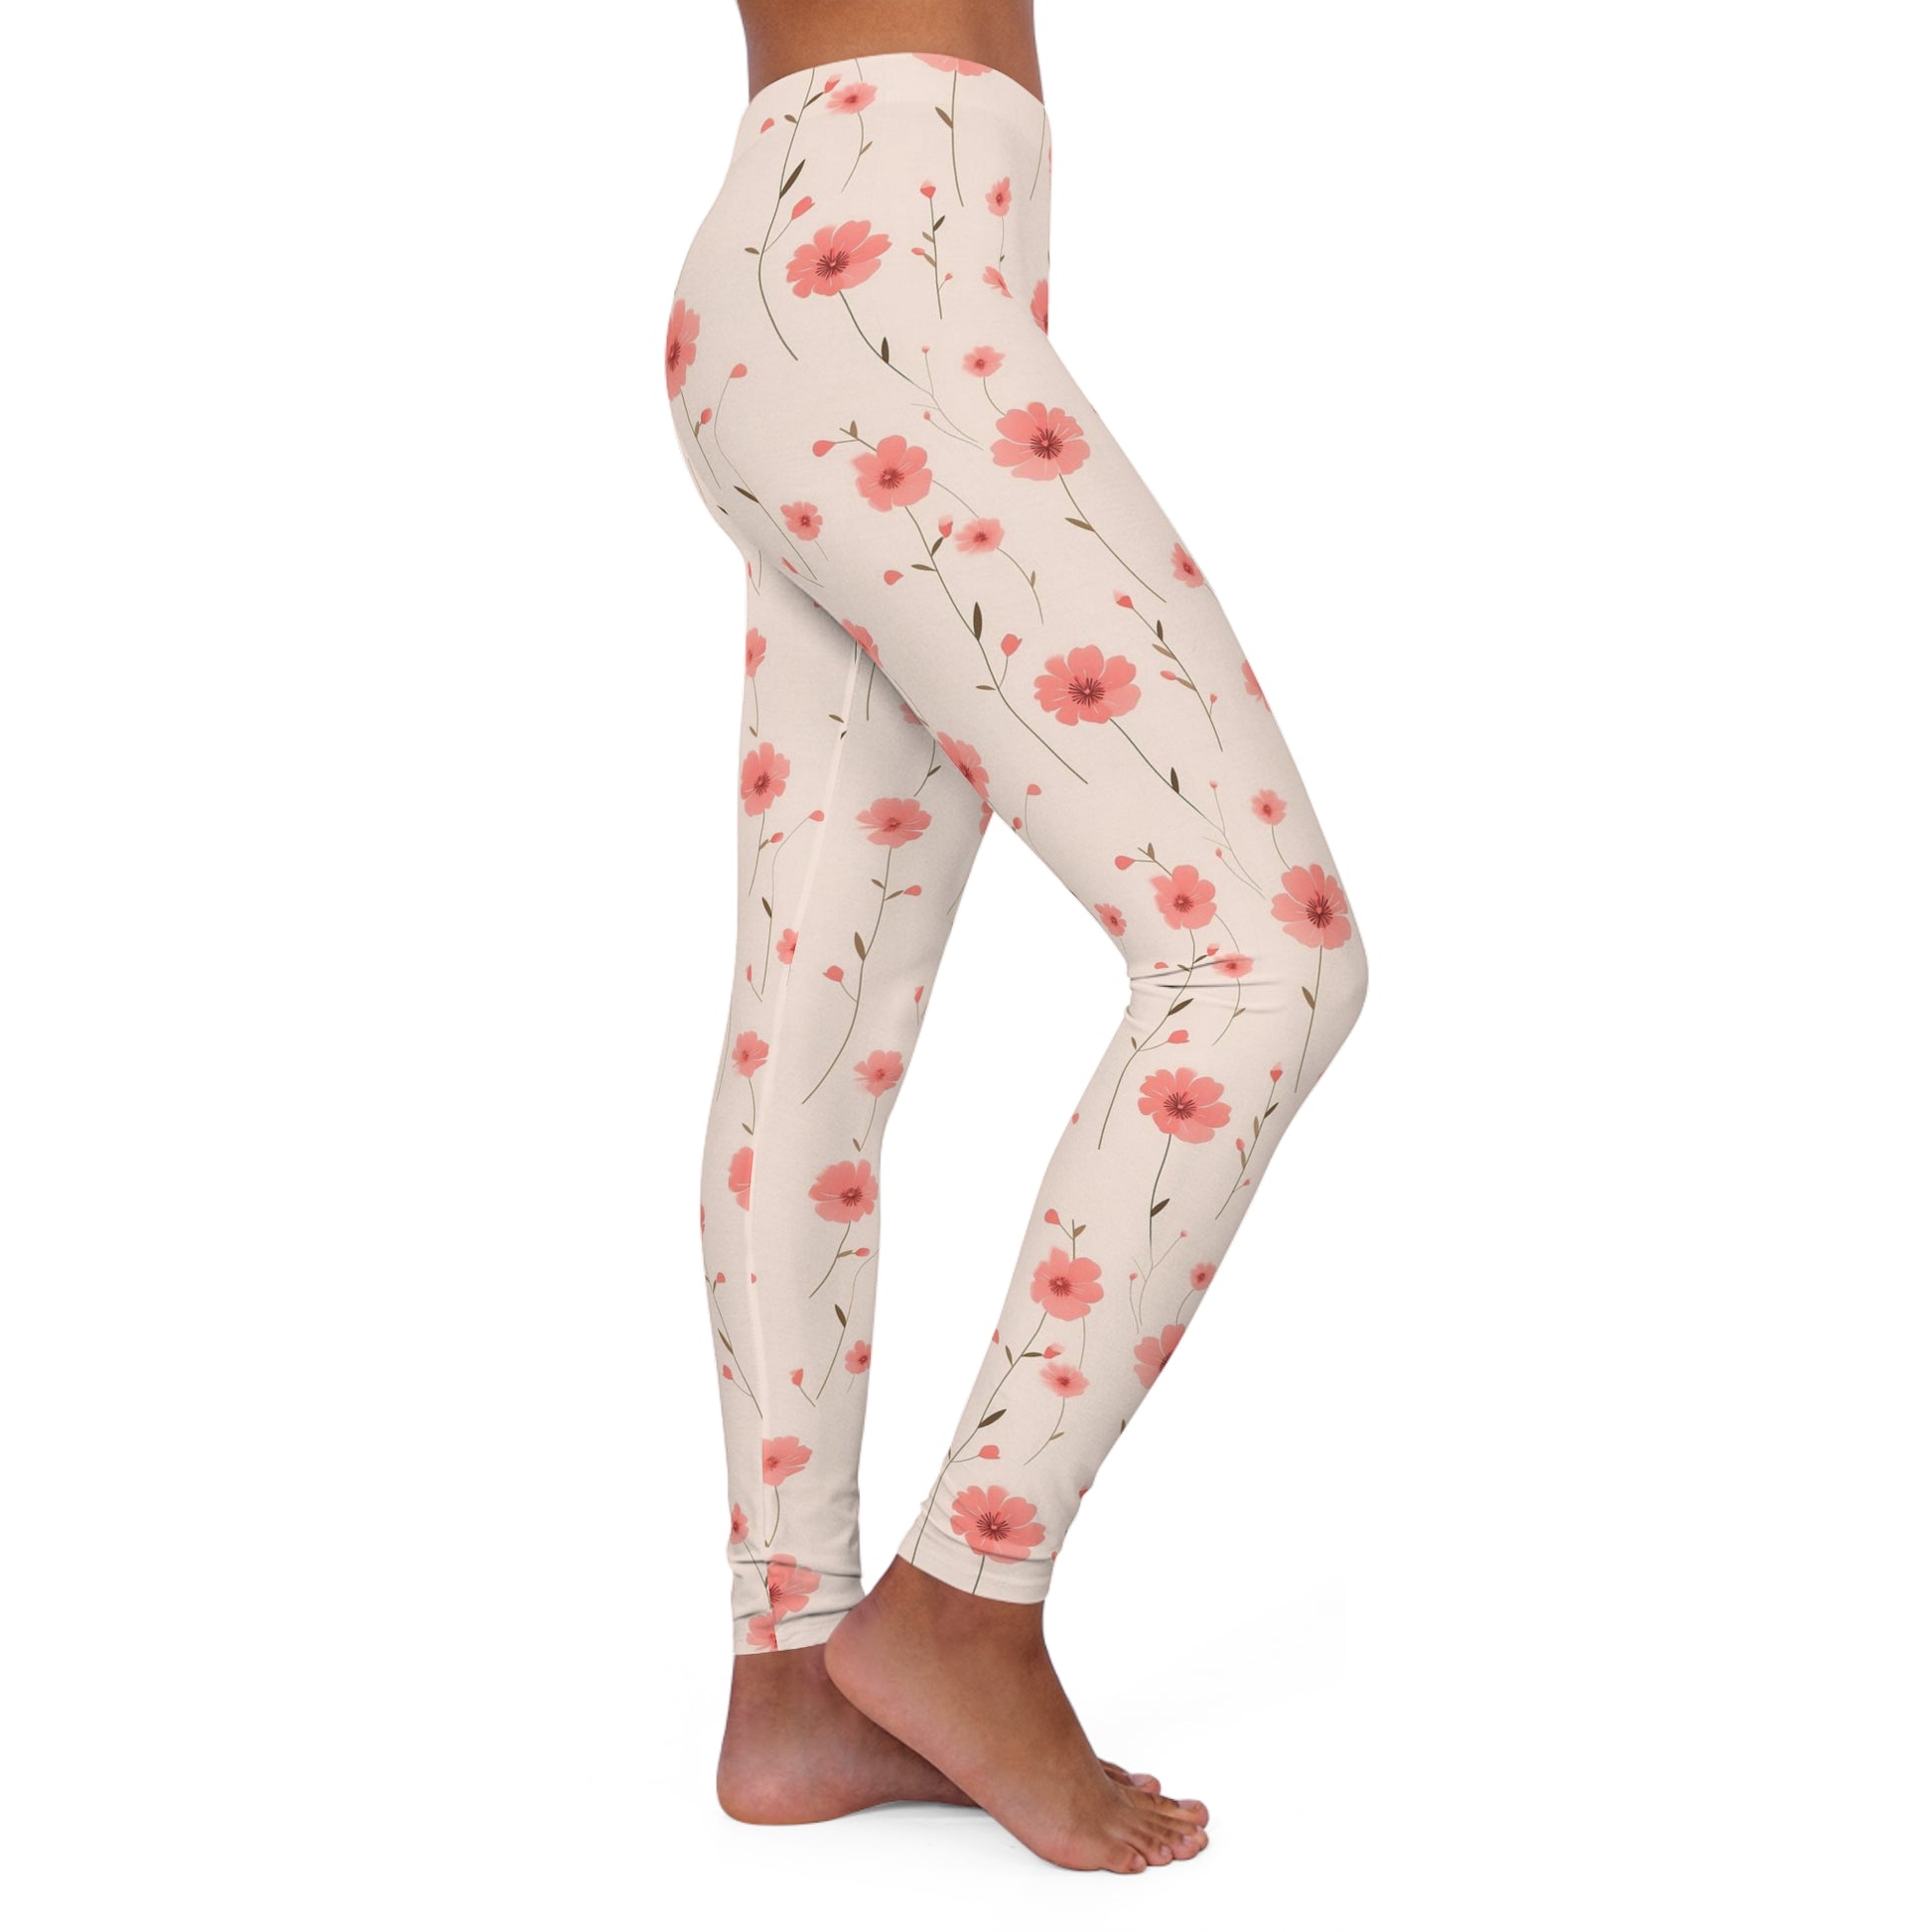 Pink Flowers Leggings Women, Floral Printed Yoga Pants Spandex Skinny Cute Graphic Workout Running Gym Fun Designer Tights Starcove Fashion